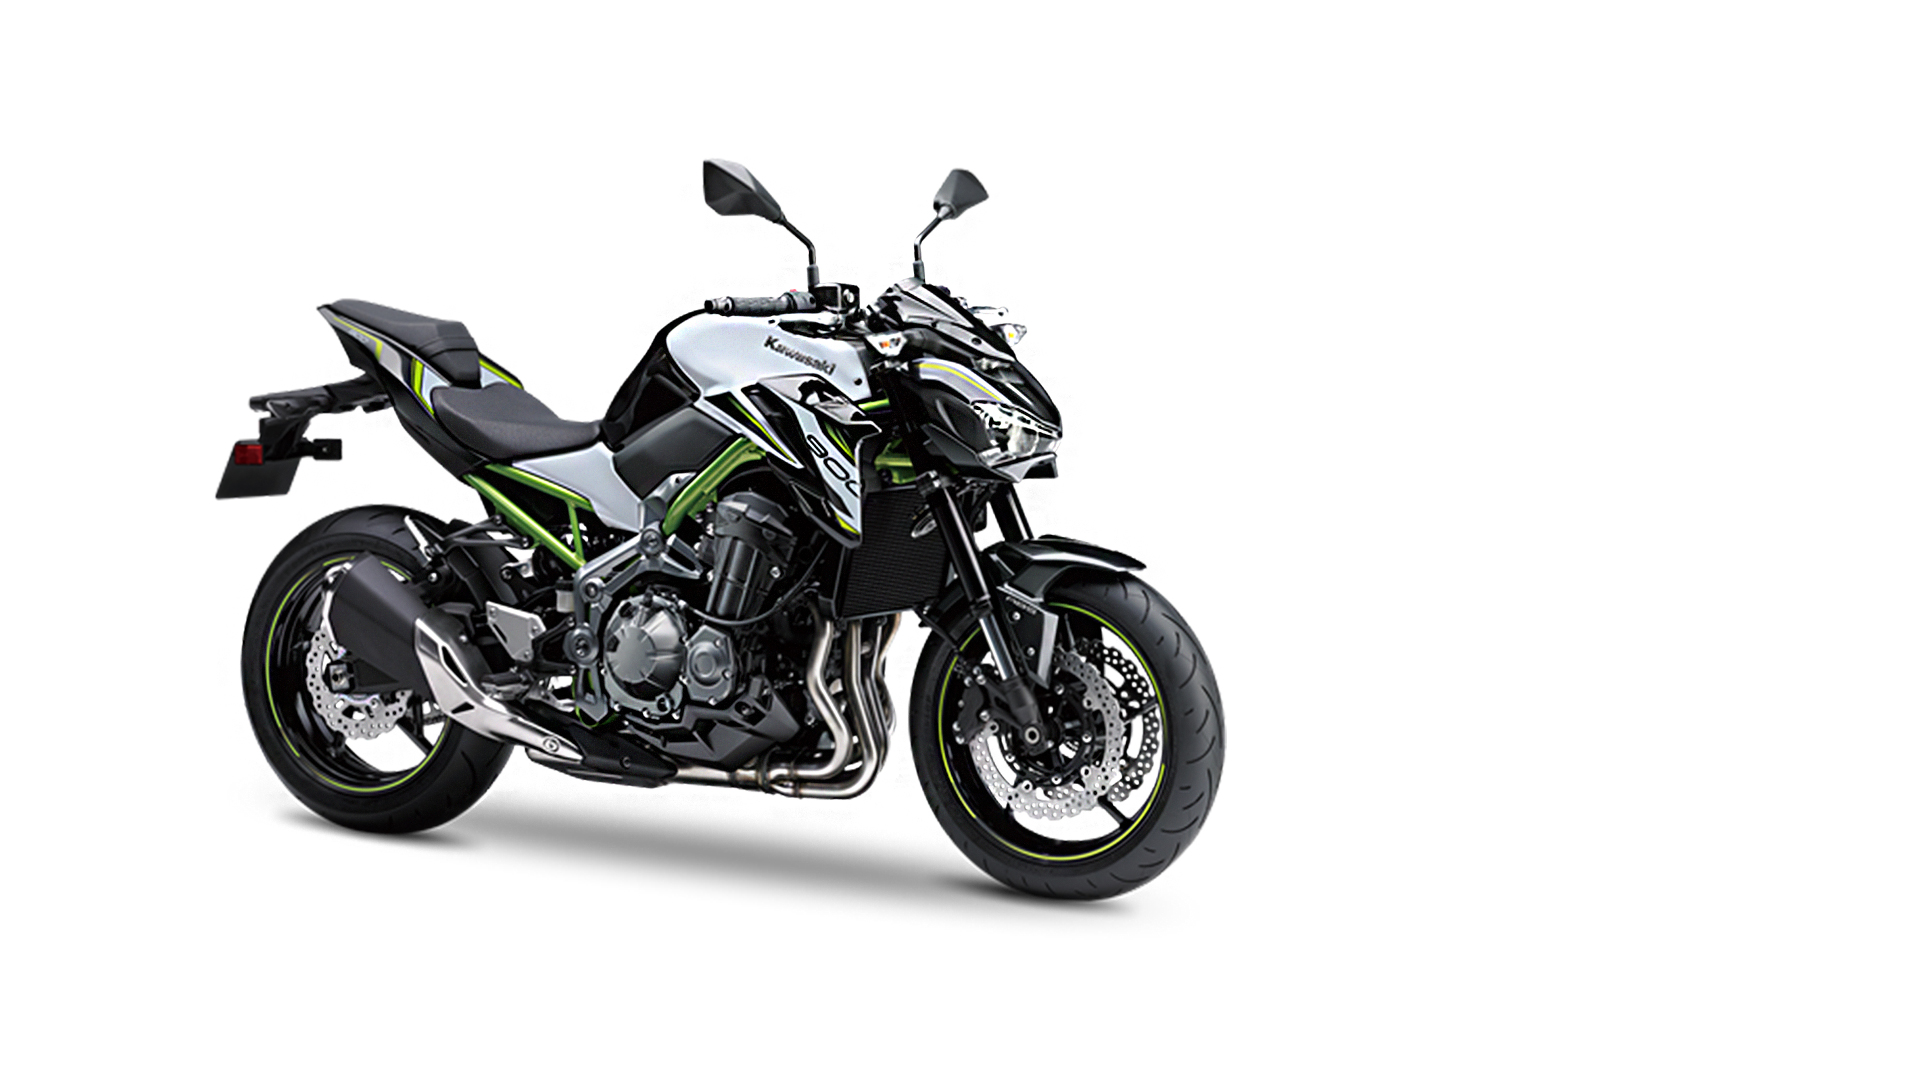 Kawasaki Z900 2020 - Price in India, Mileage, Reviews, Colours